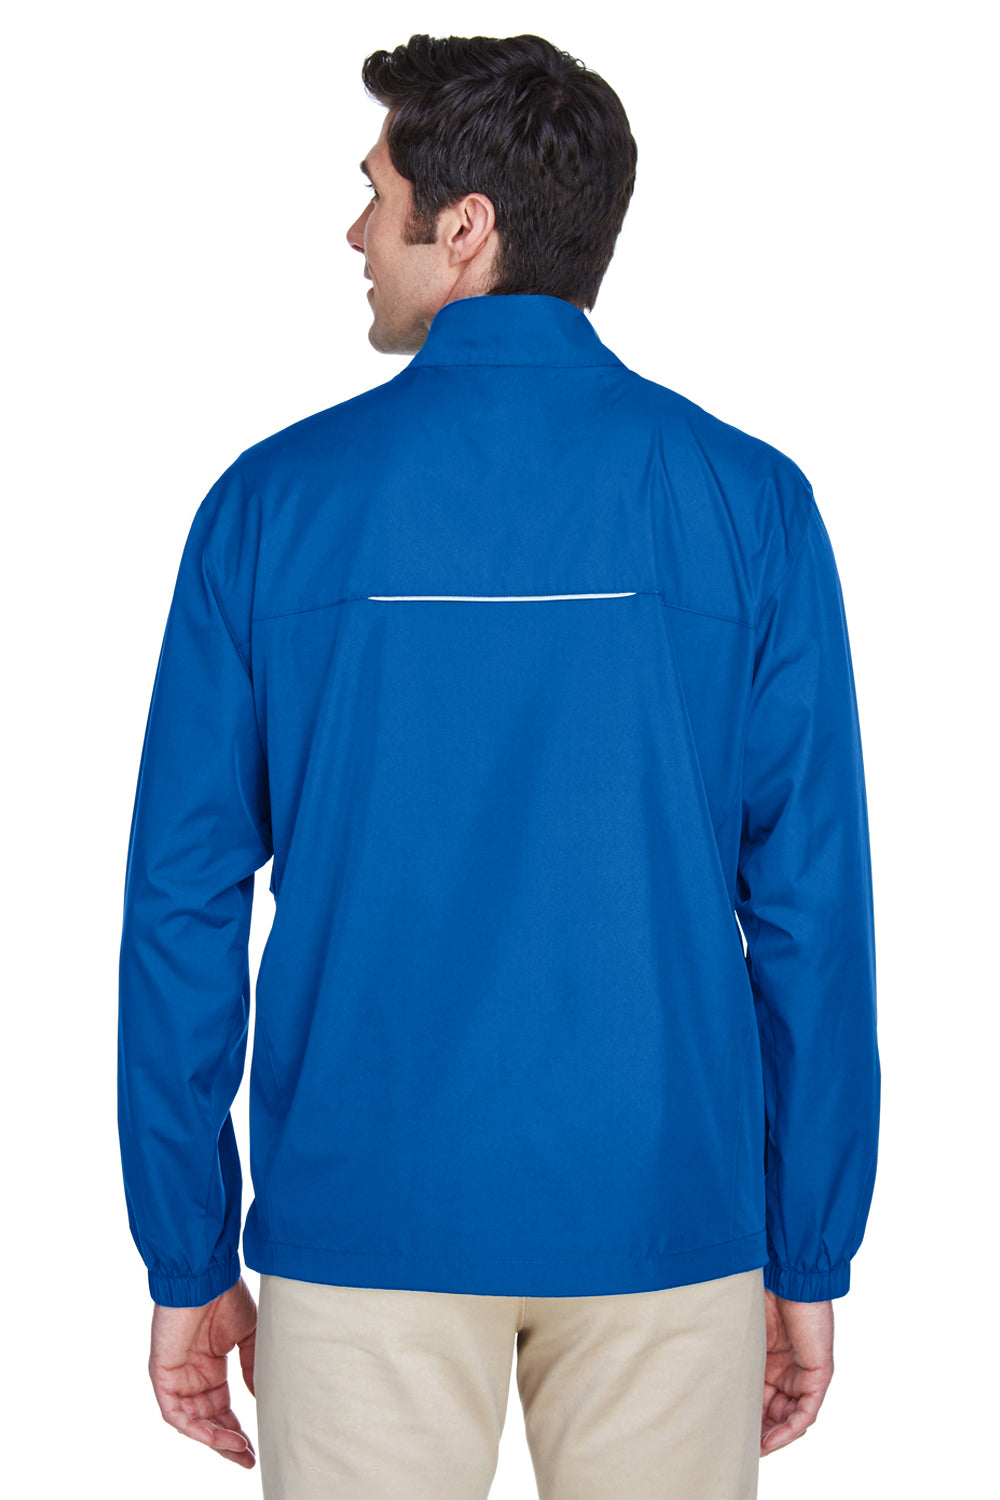 Core 365 88183 Mens Motivate Water Resistant Full Zip Jacket Royal Blue Back